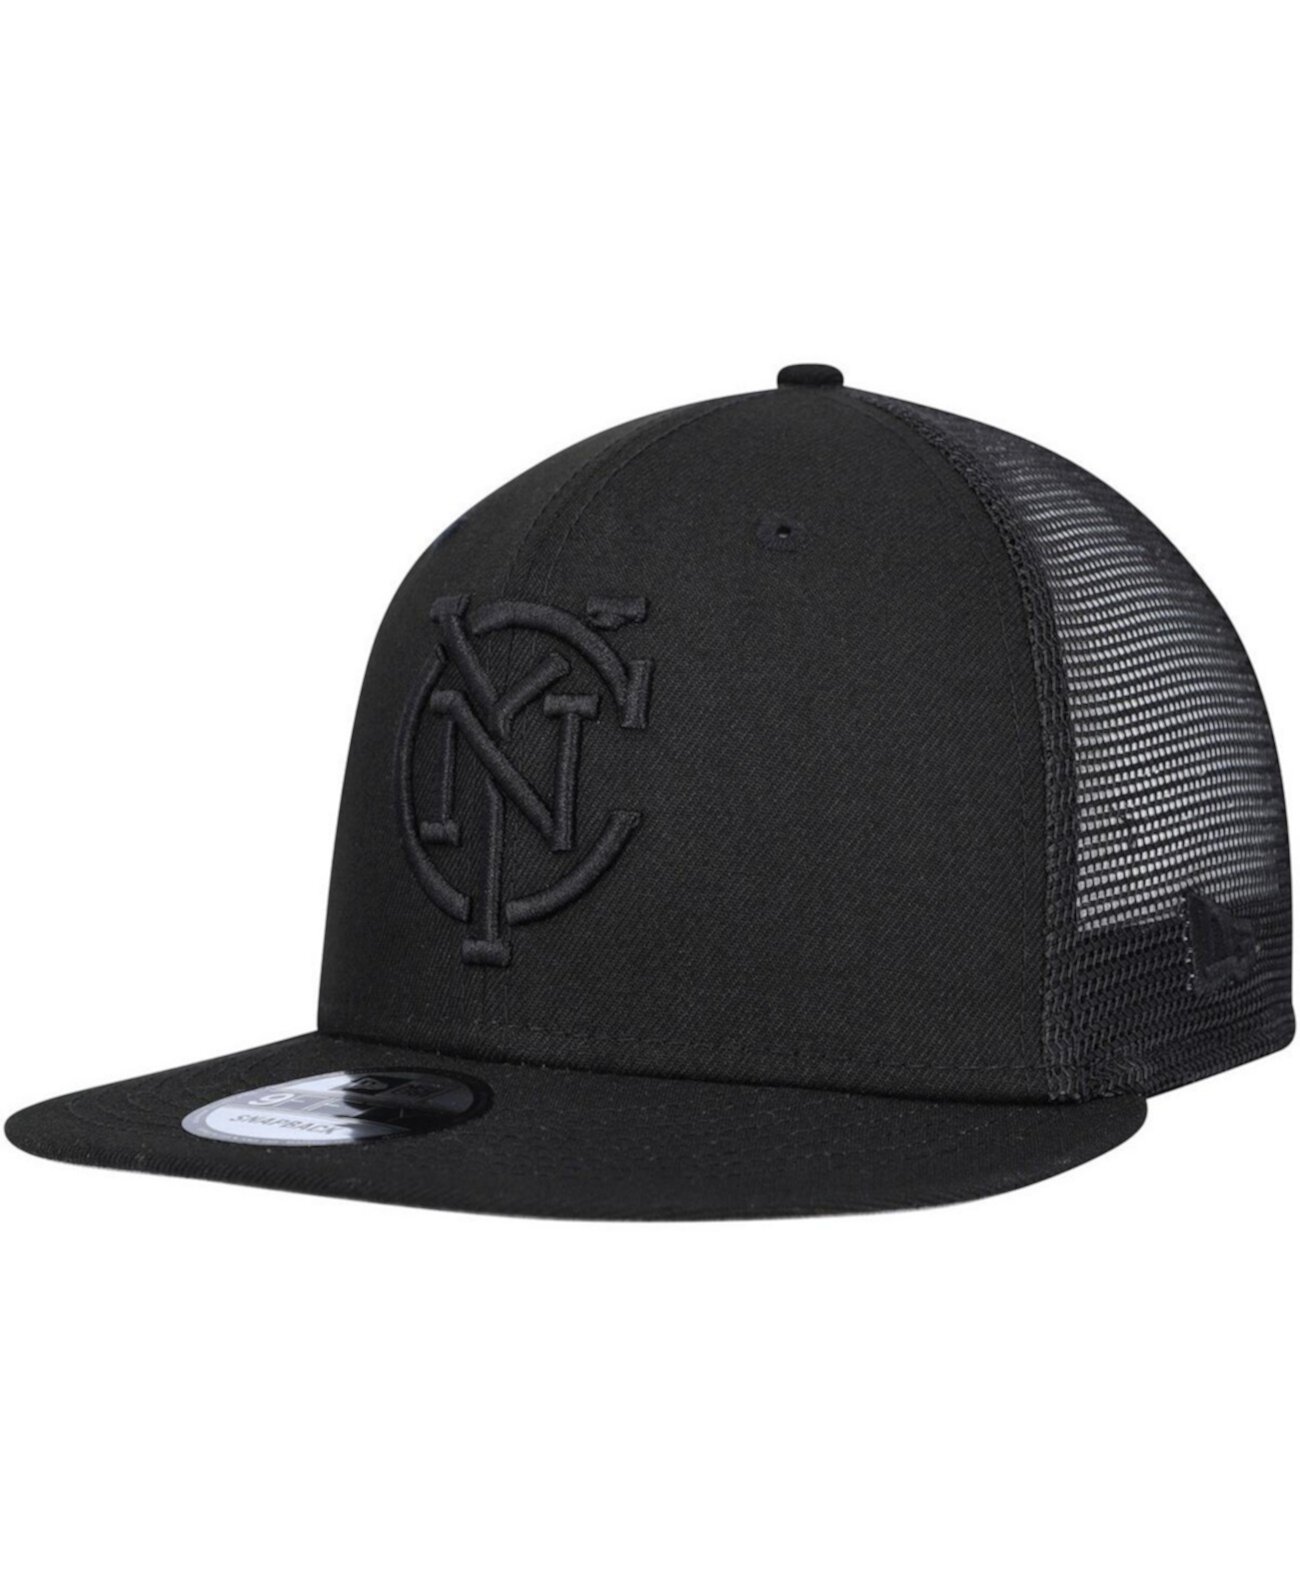 Мужская черная бейсболка с логотипом New York City FC 9FIFTY Trucker Snapback New Era